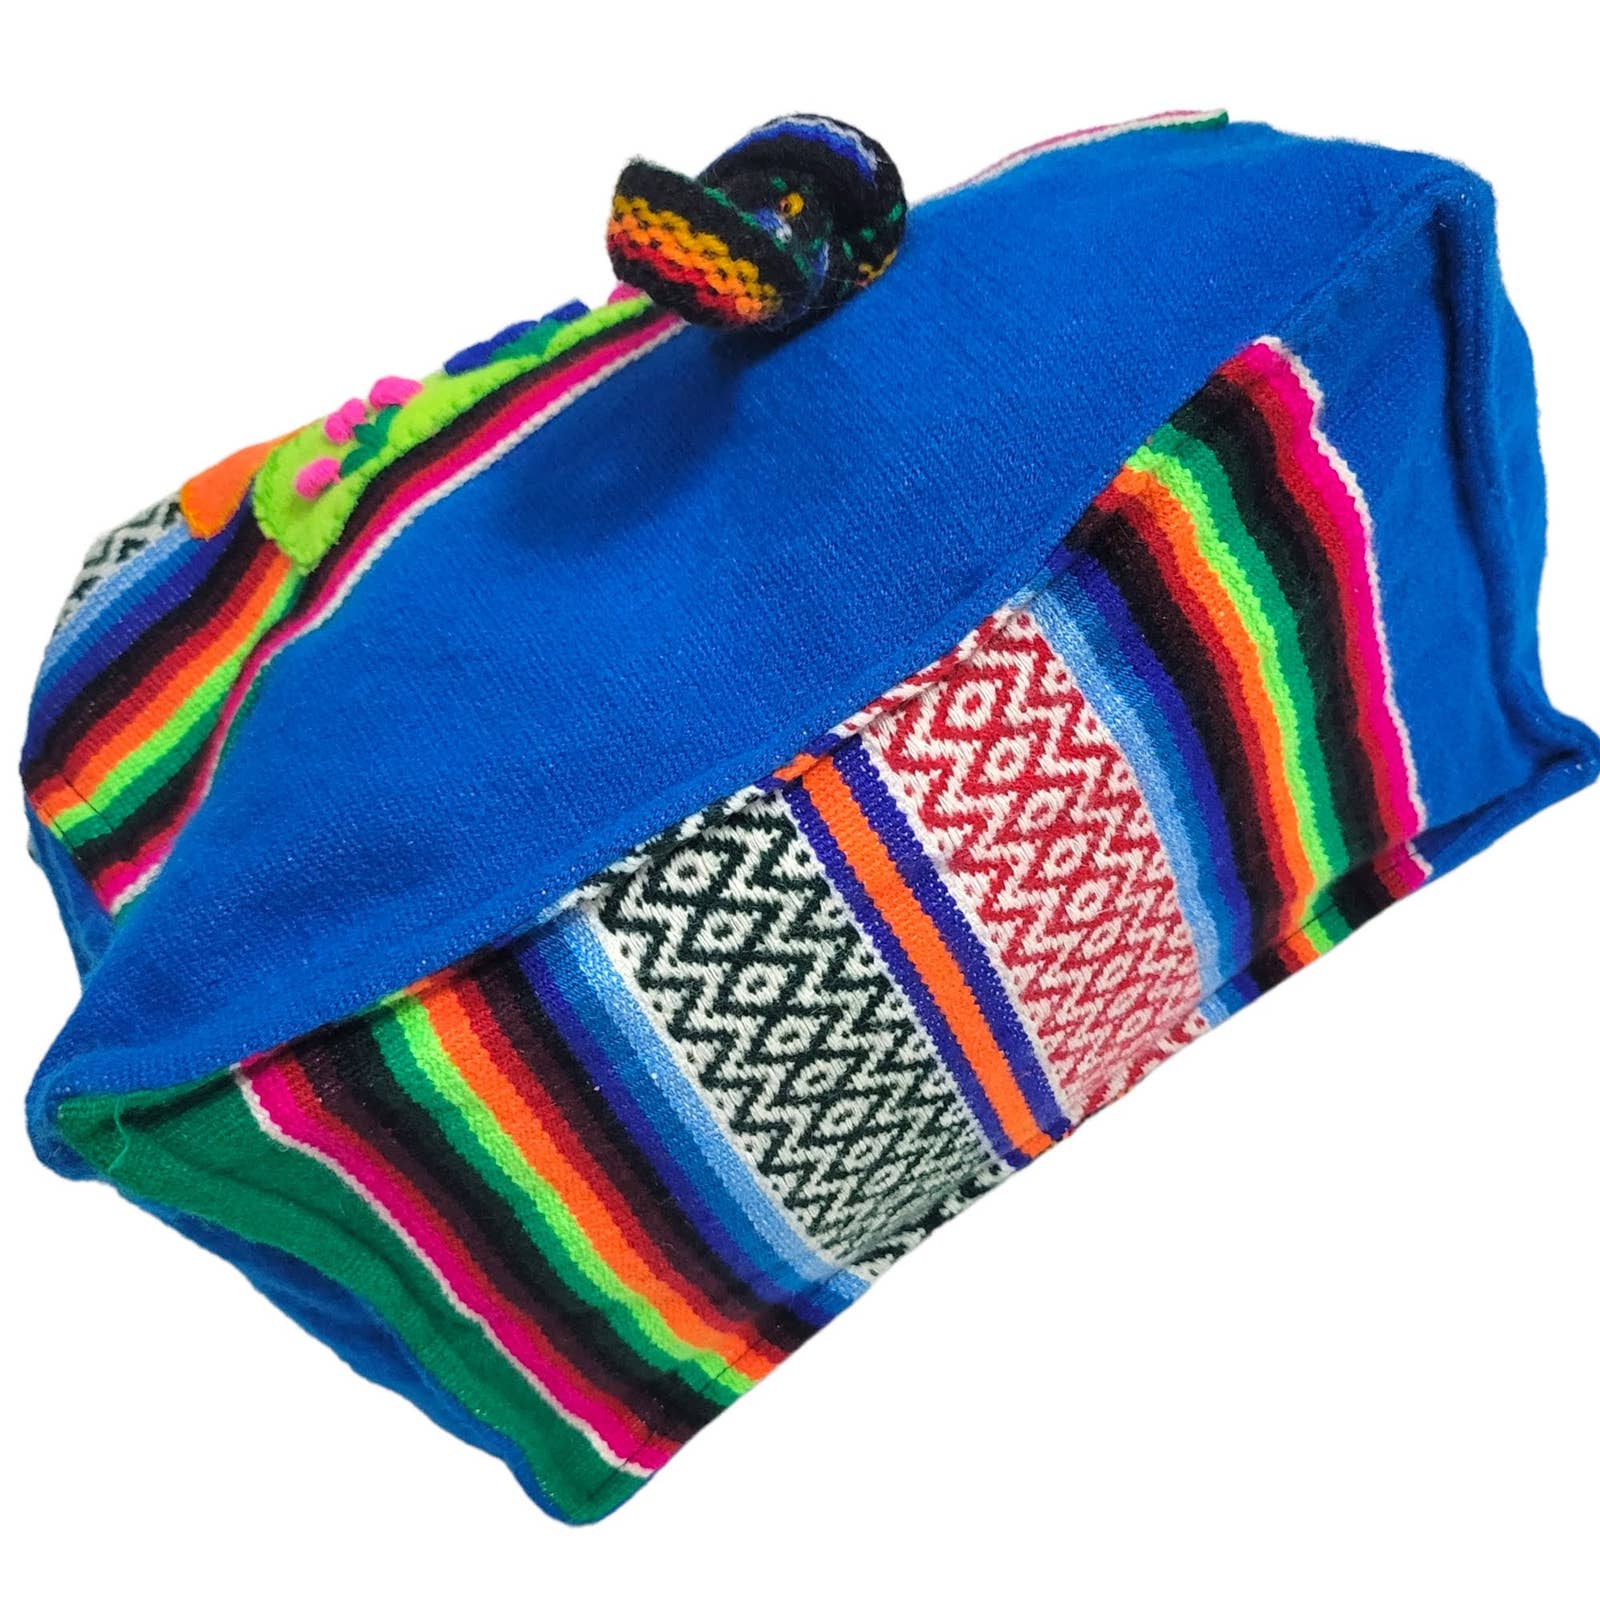 Peru Arpilleras Backpack Blue Woven Blanket Bag Alpaca Colorful Folk Art Patchwork Burlap Cusco